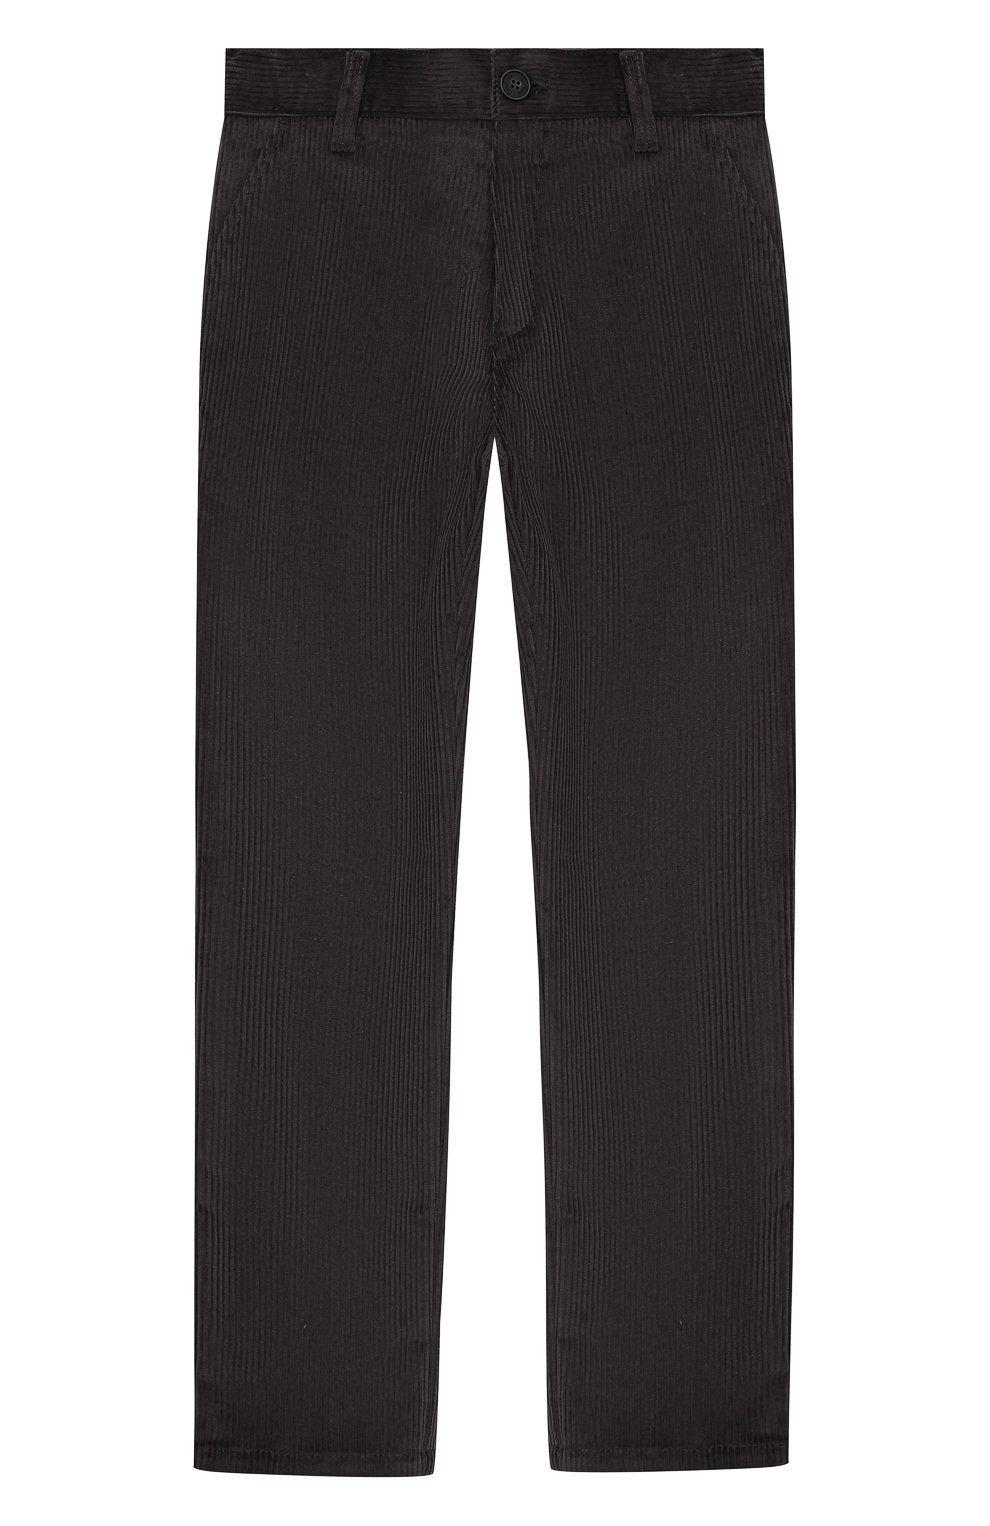 Фото Хлопковые брюки DAL LAGO темно-серого цвета Италия N108/8728/7-12 